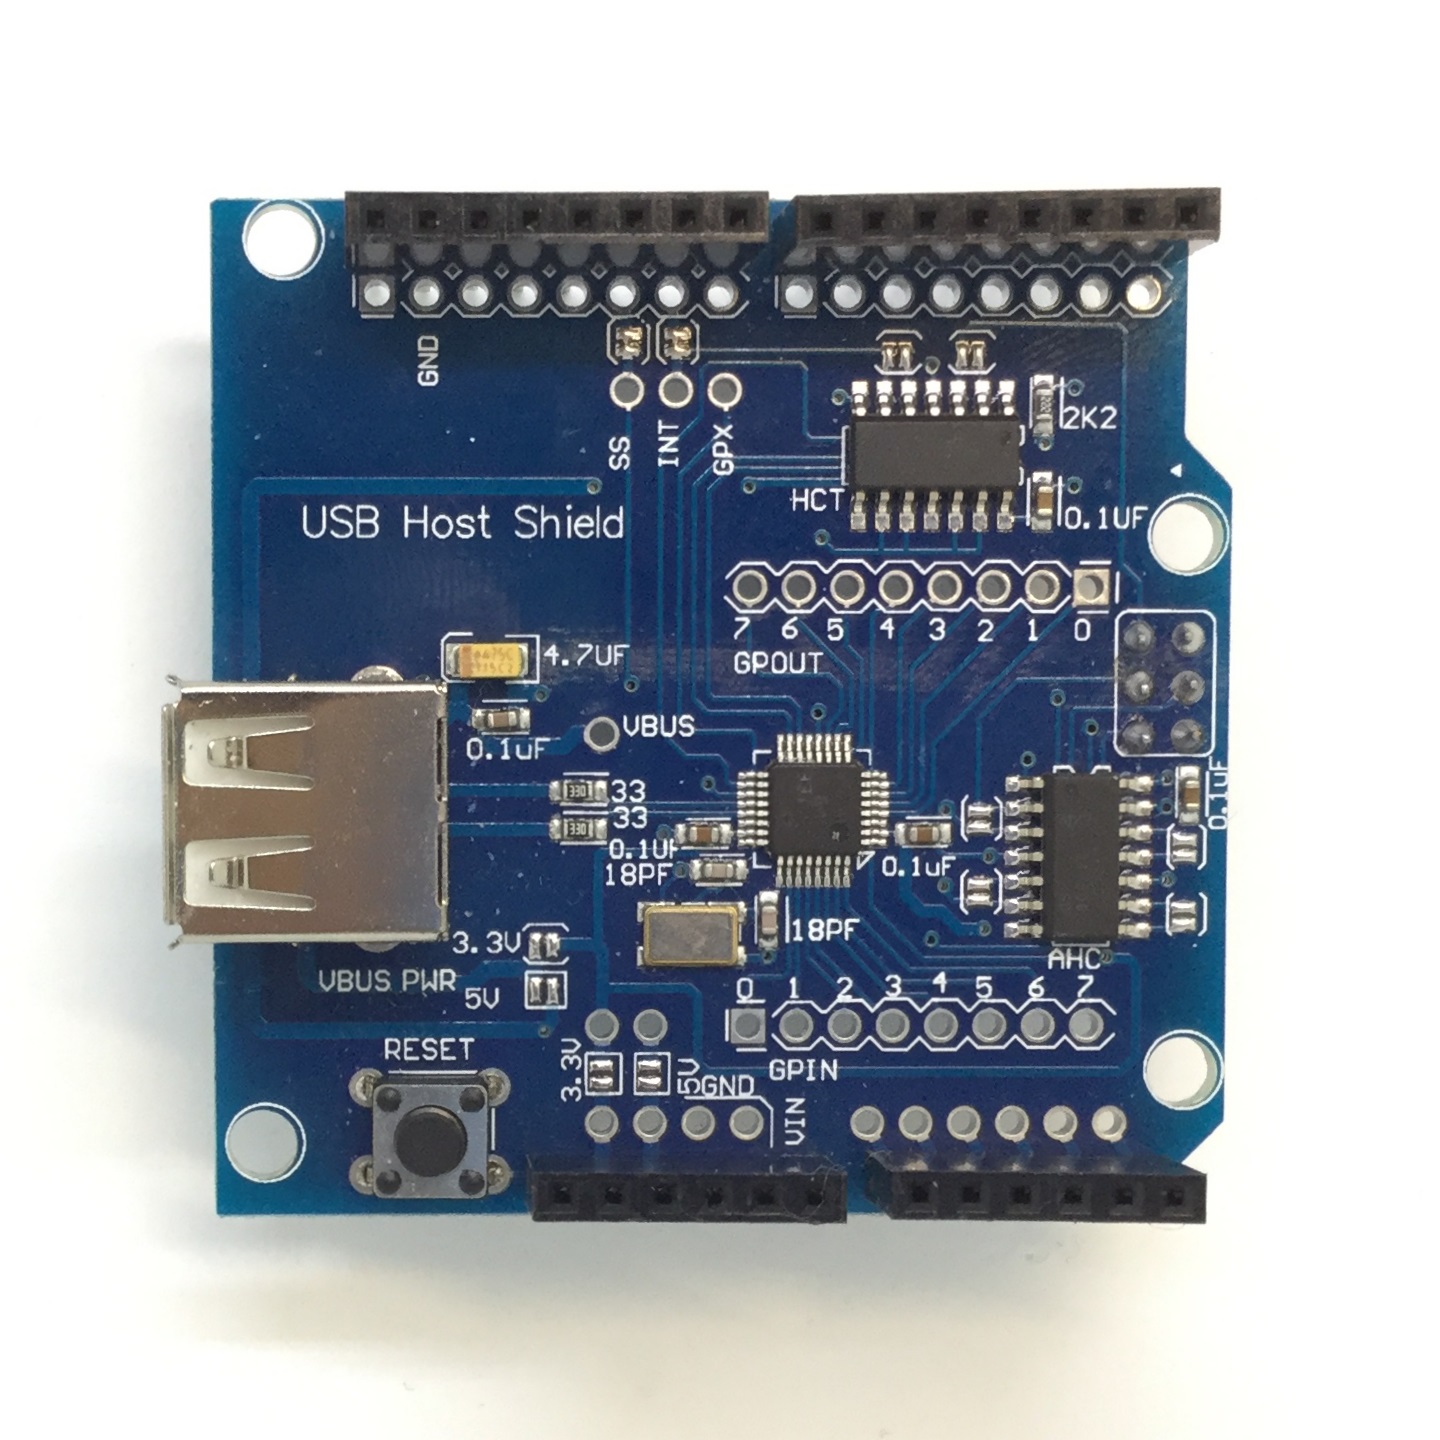 Hosting shield. USB host Shield Arduino Nano. USB host Shield распиновка. USB host Shield 2.0 схема. USB host Shield Library.